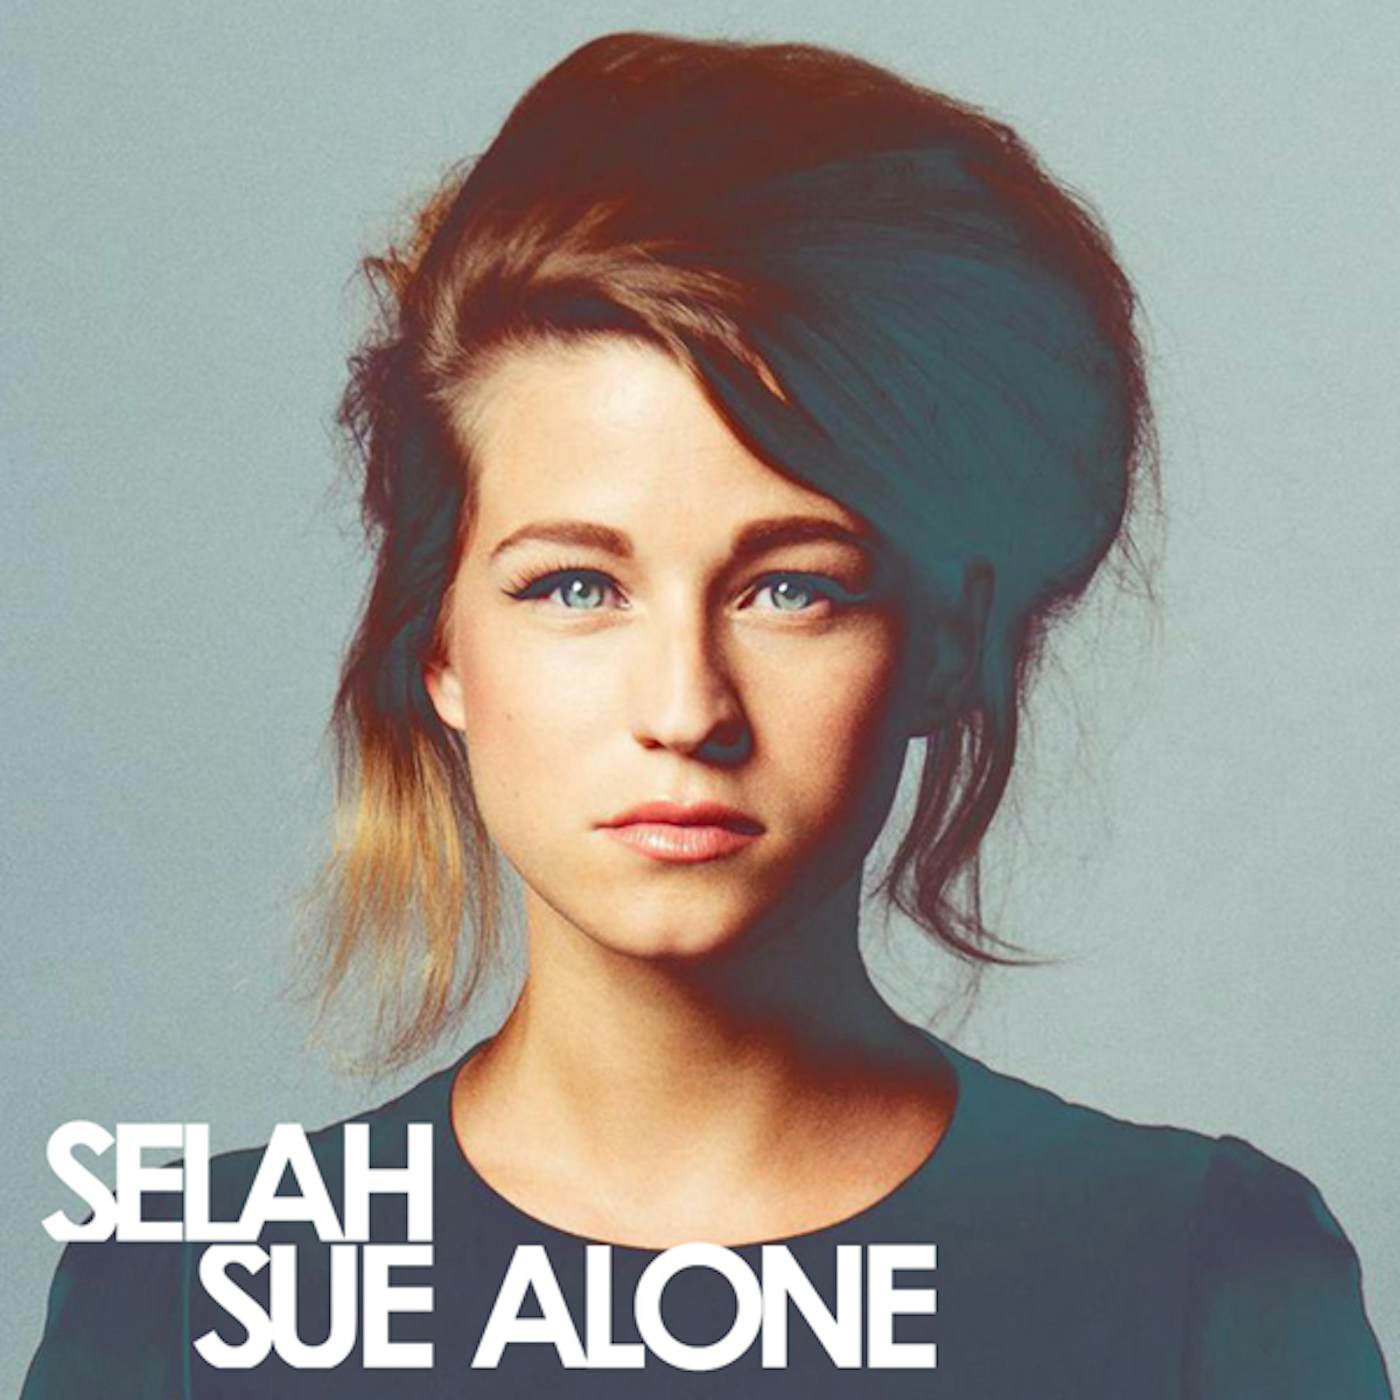 Selah Sue Alone Vinyl Record